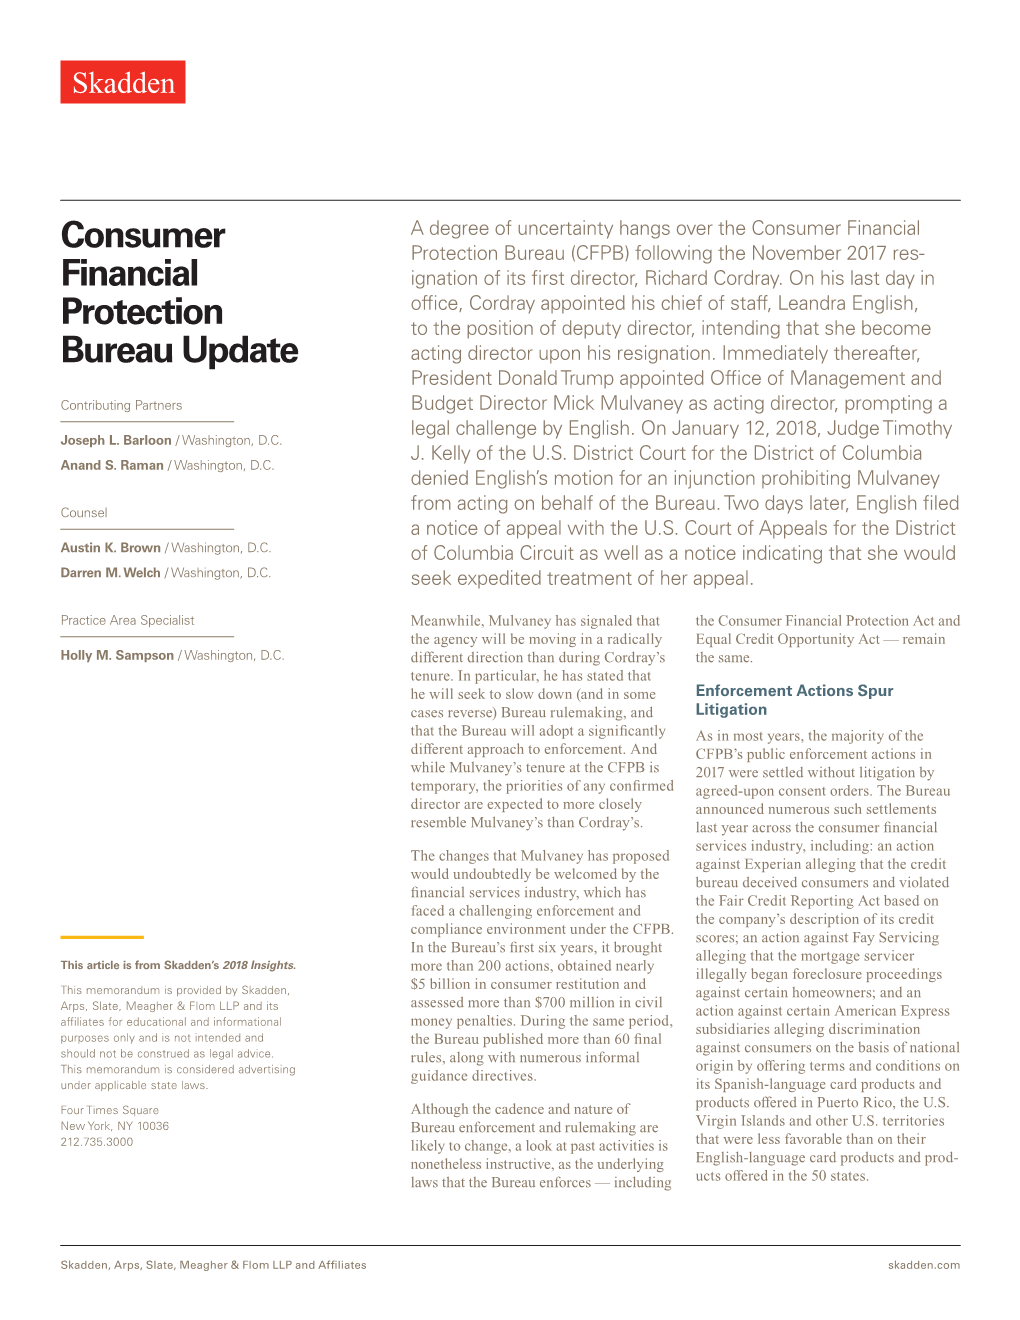 Consumer Financial Protection Bureau Update